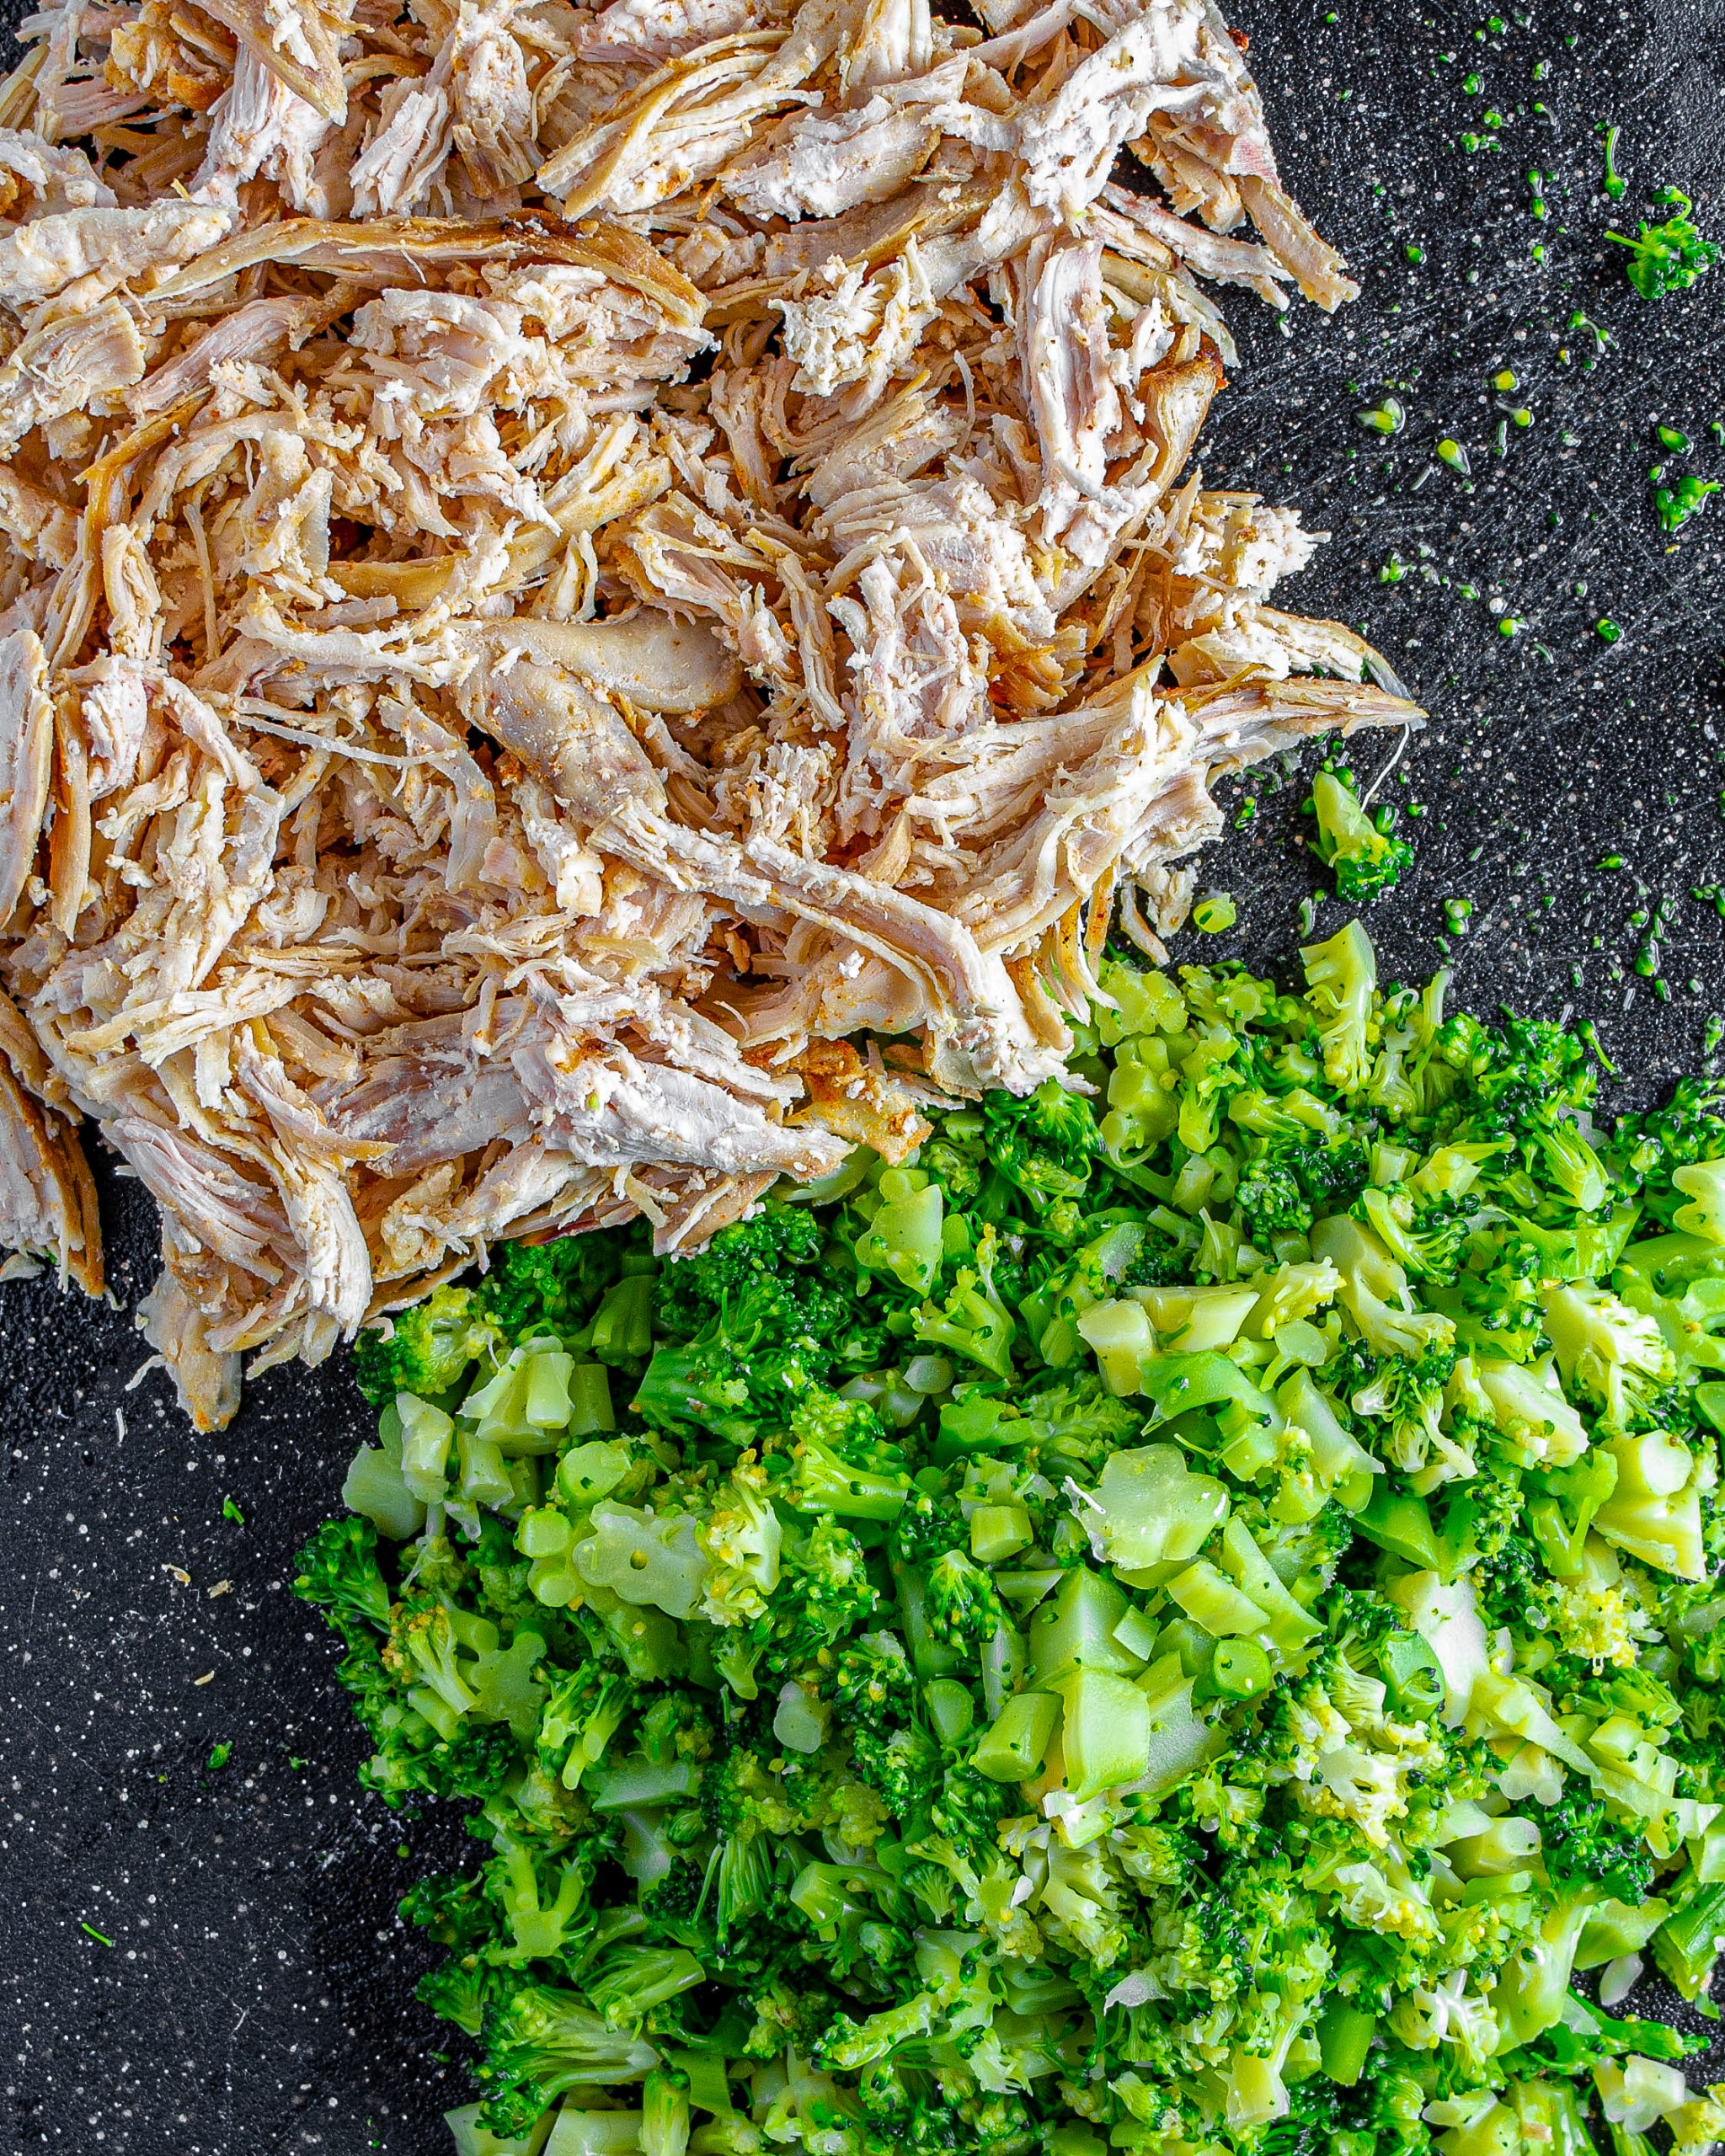 Mix together the chicken, broccoli, and garlic powder.